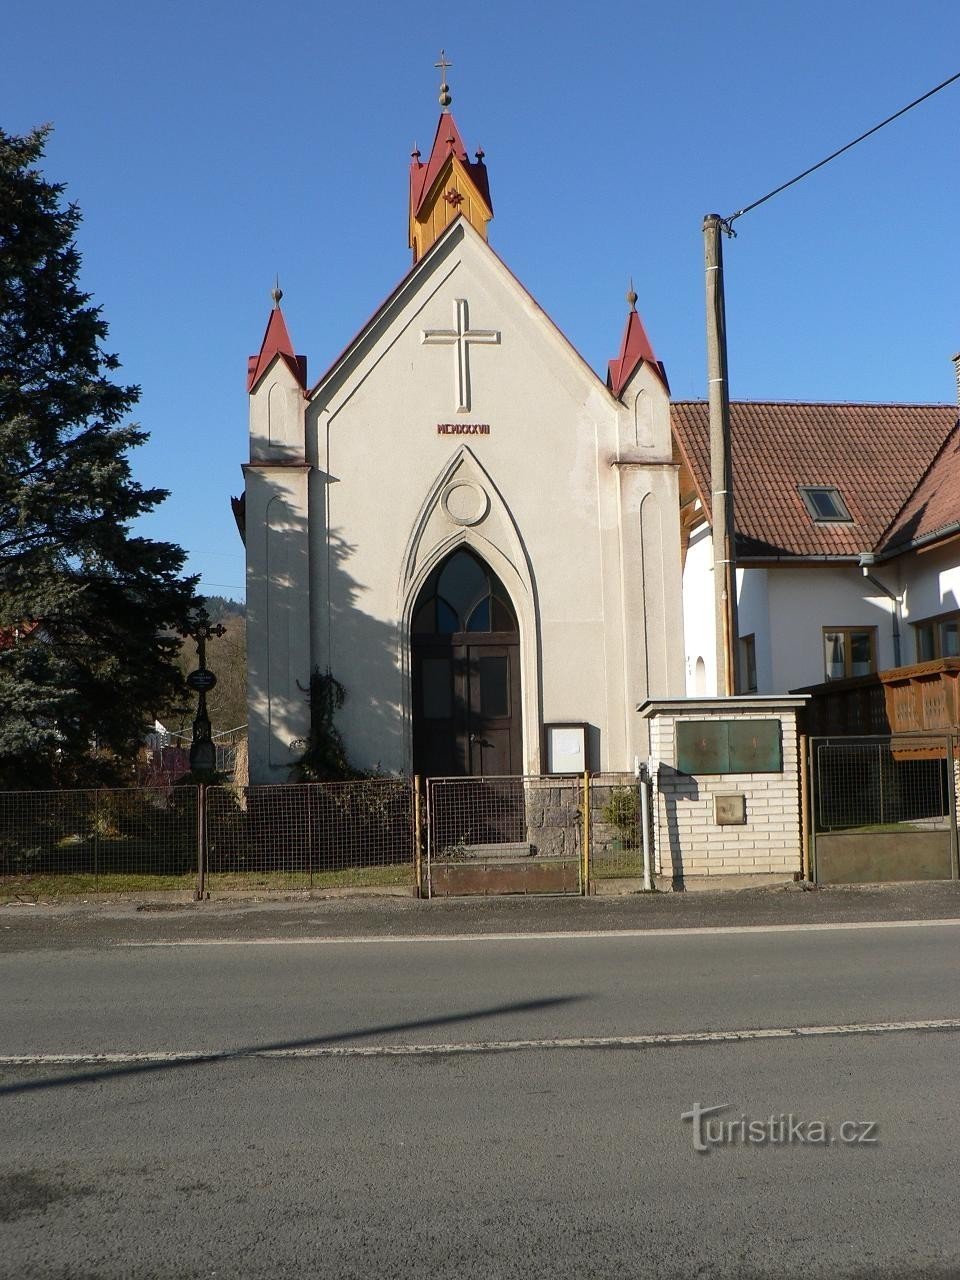 Vrhaveč, devant la chapelle